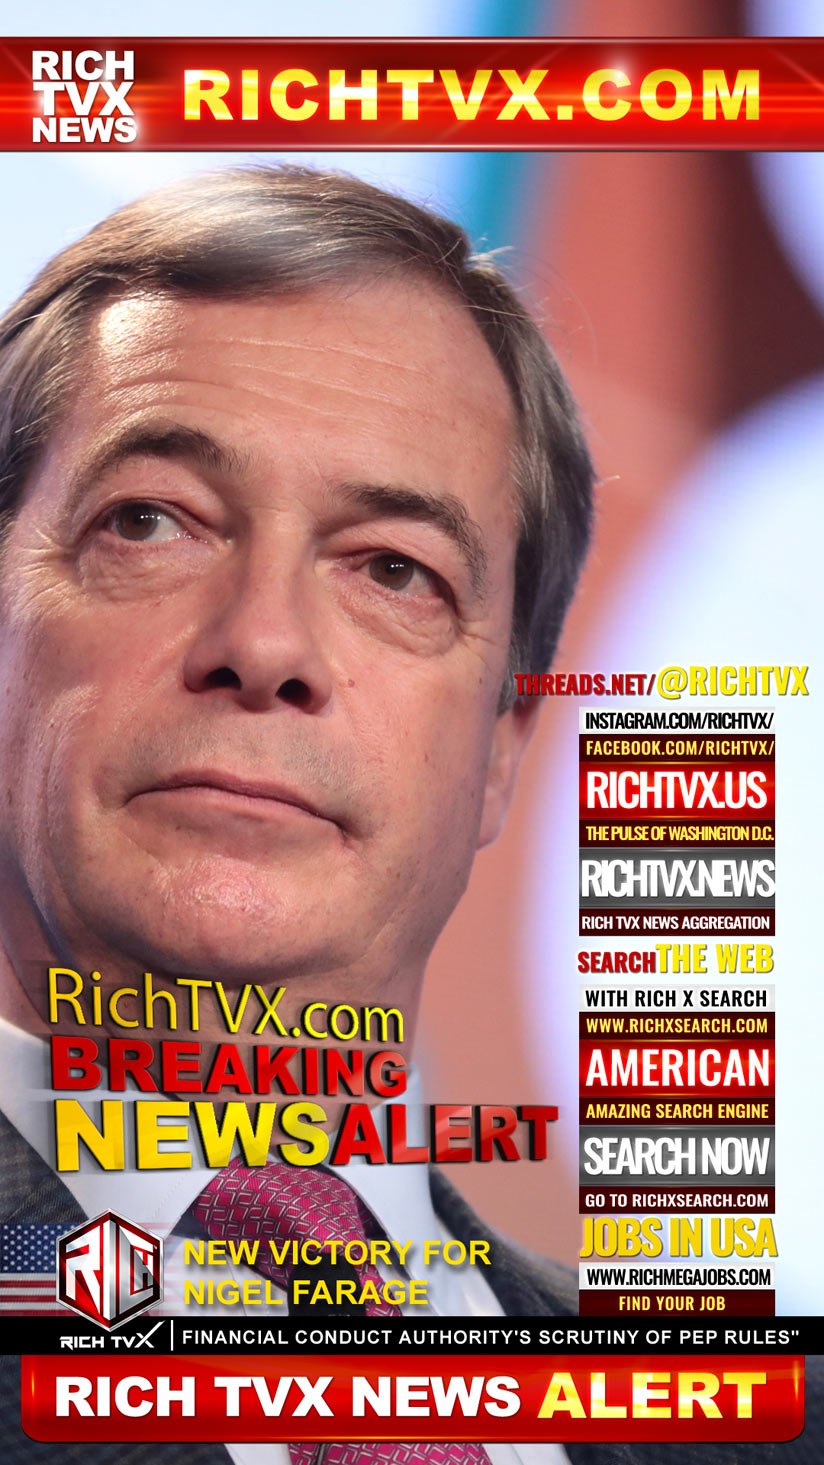 Breaking News: Nigel Farage’s Victory in Ongoing Debanking Scandal